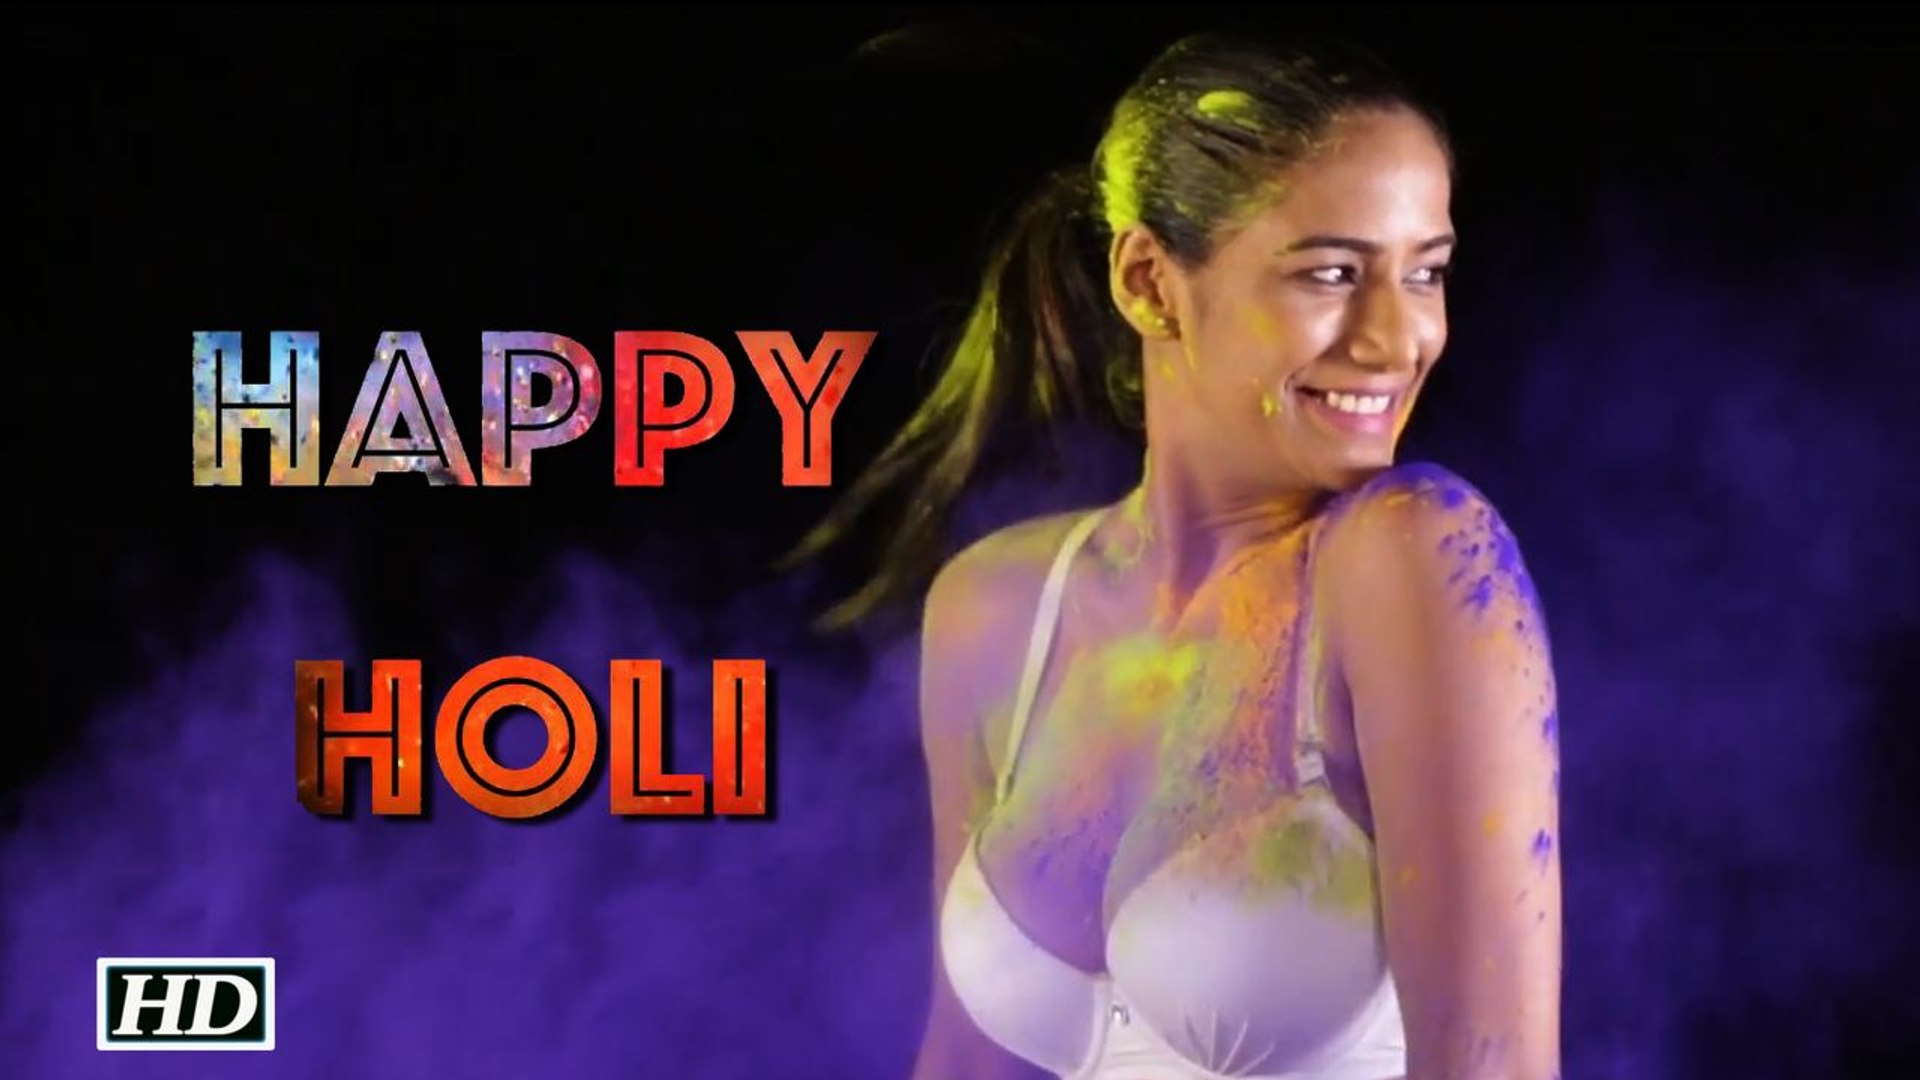 Happy holi sexy video